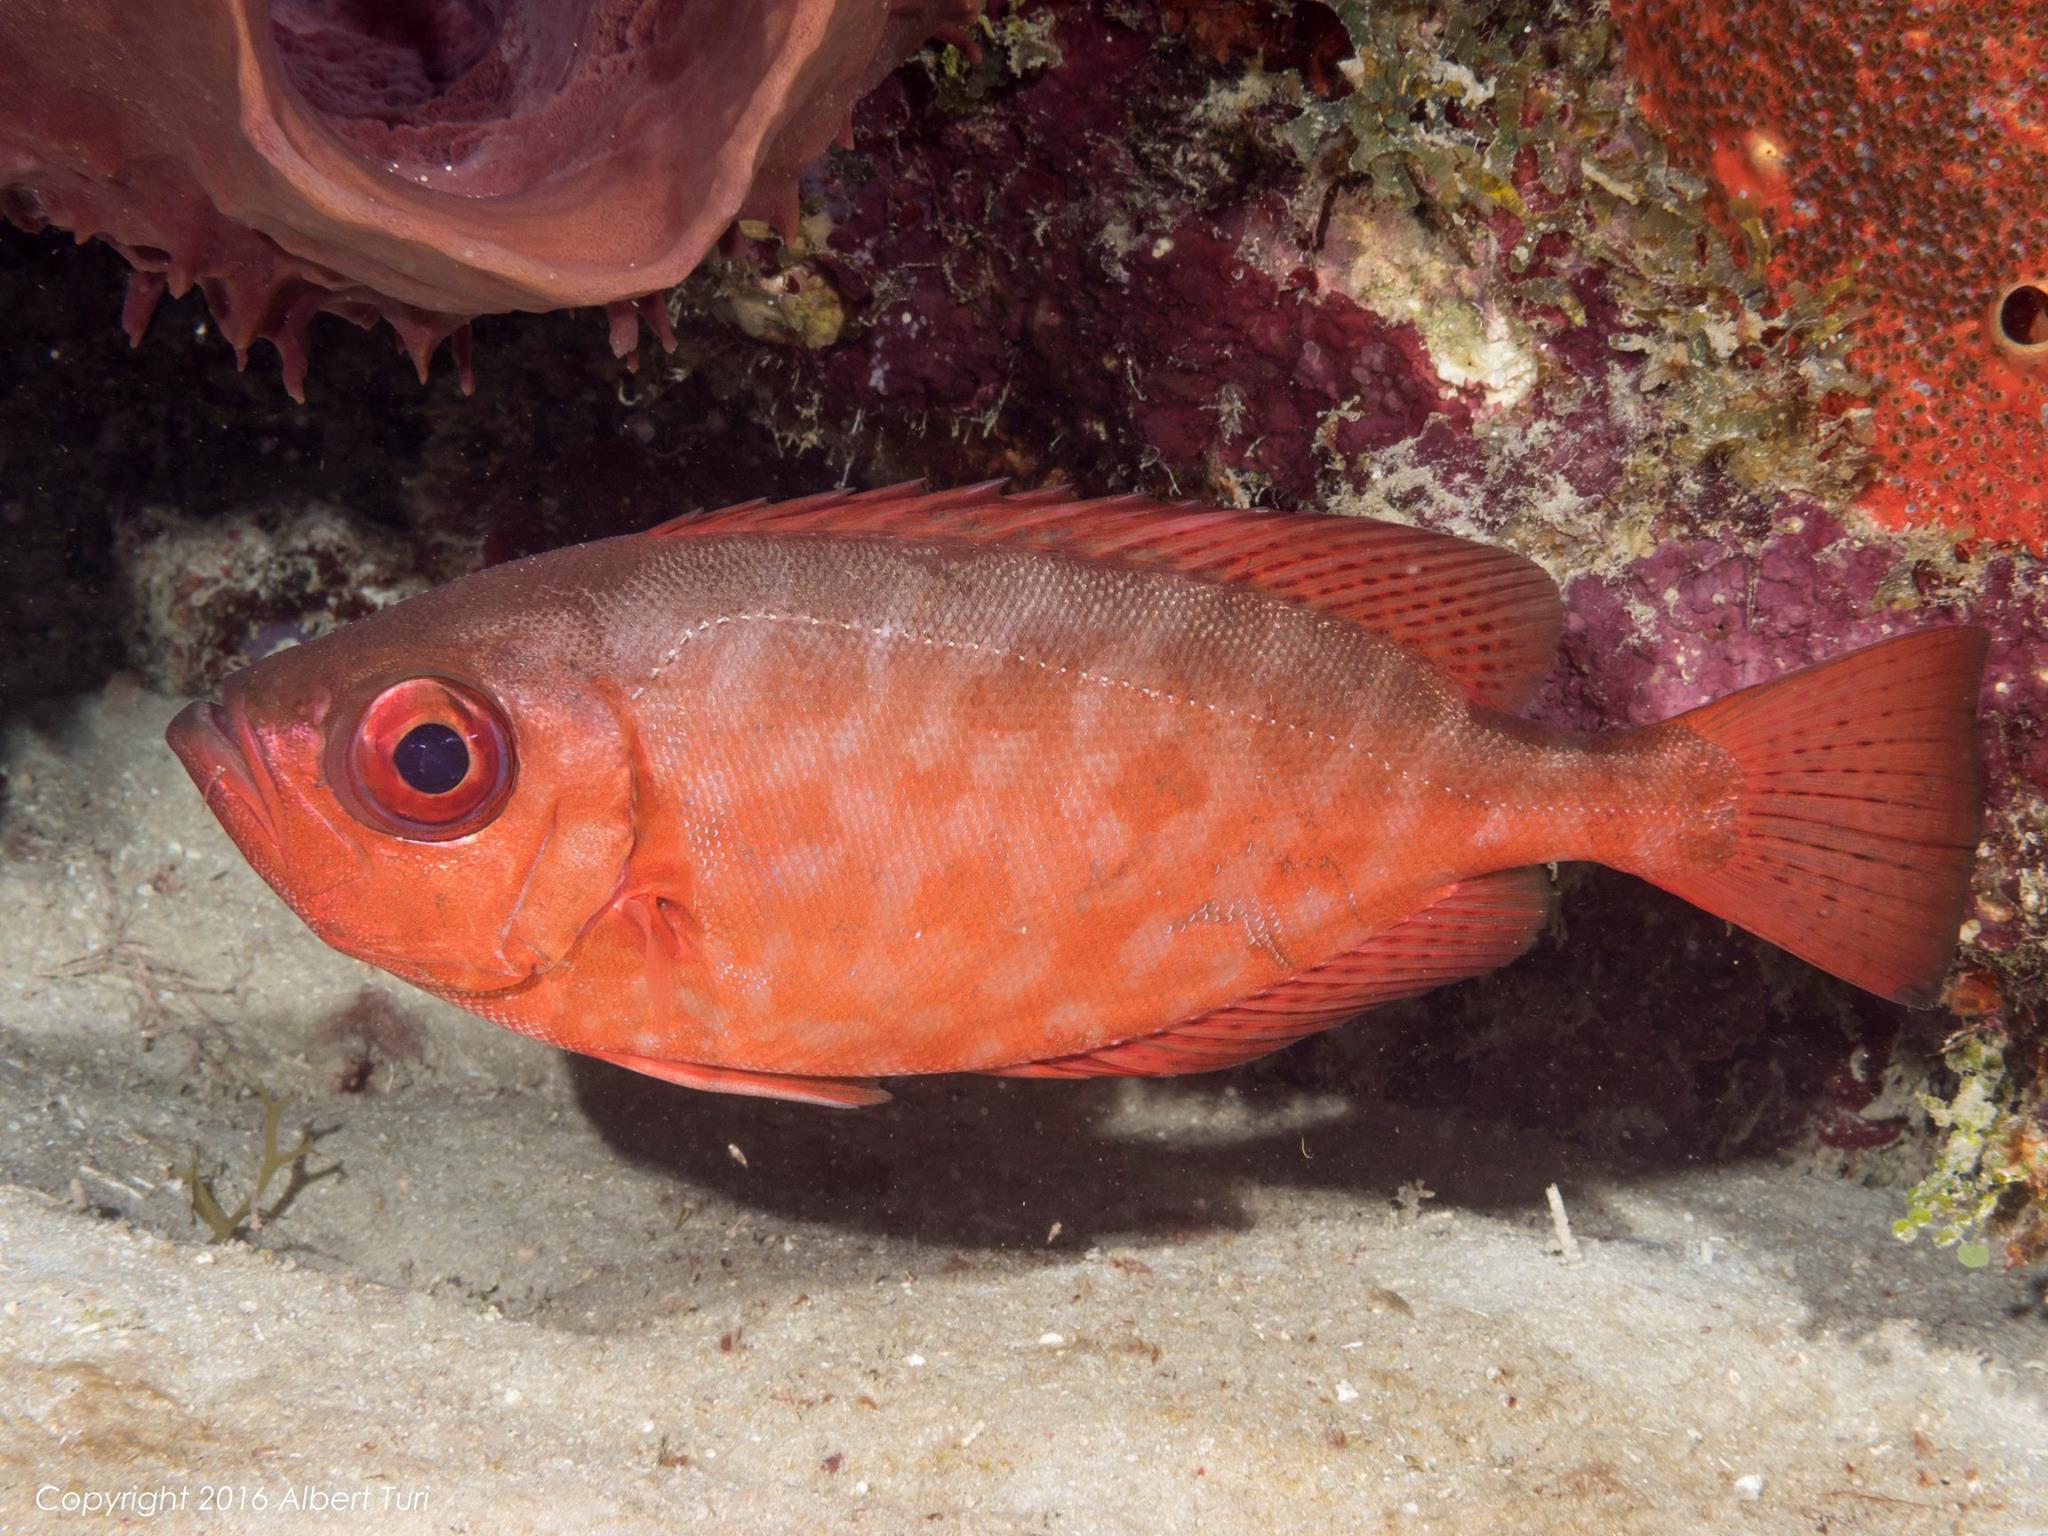 red fish underwater